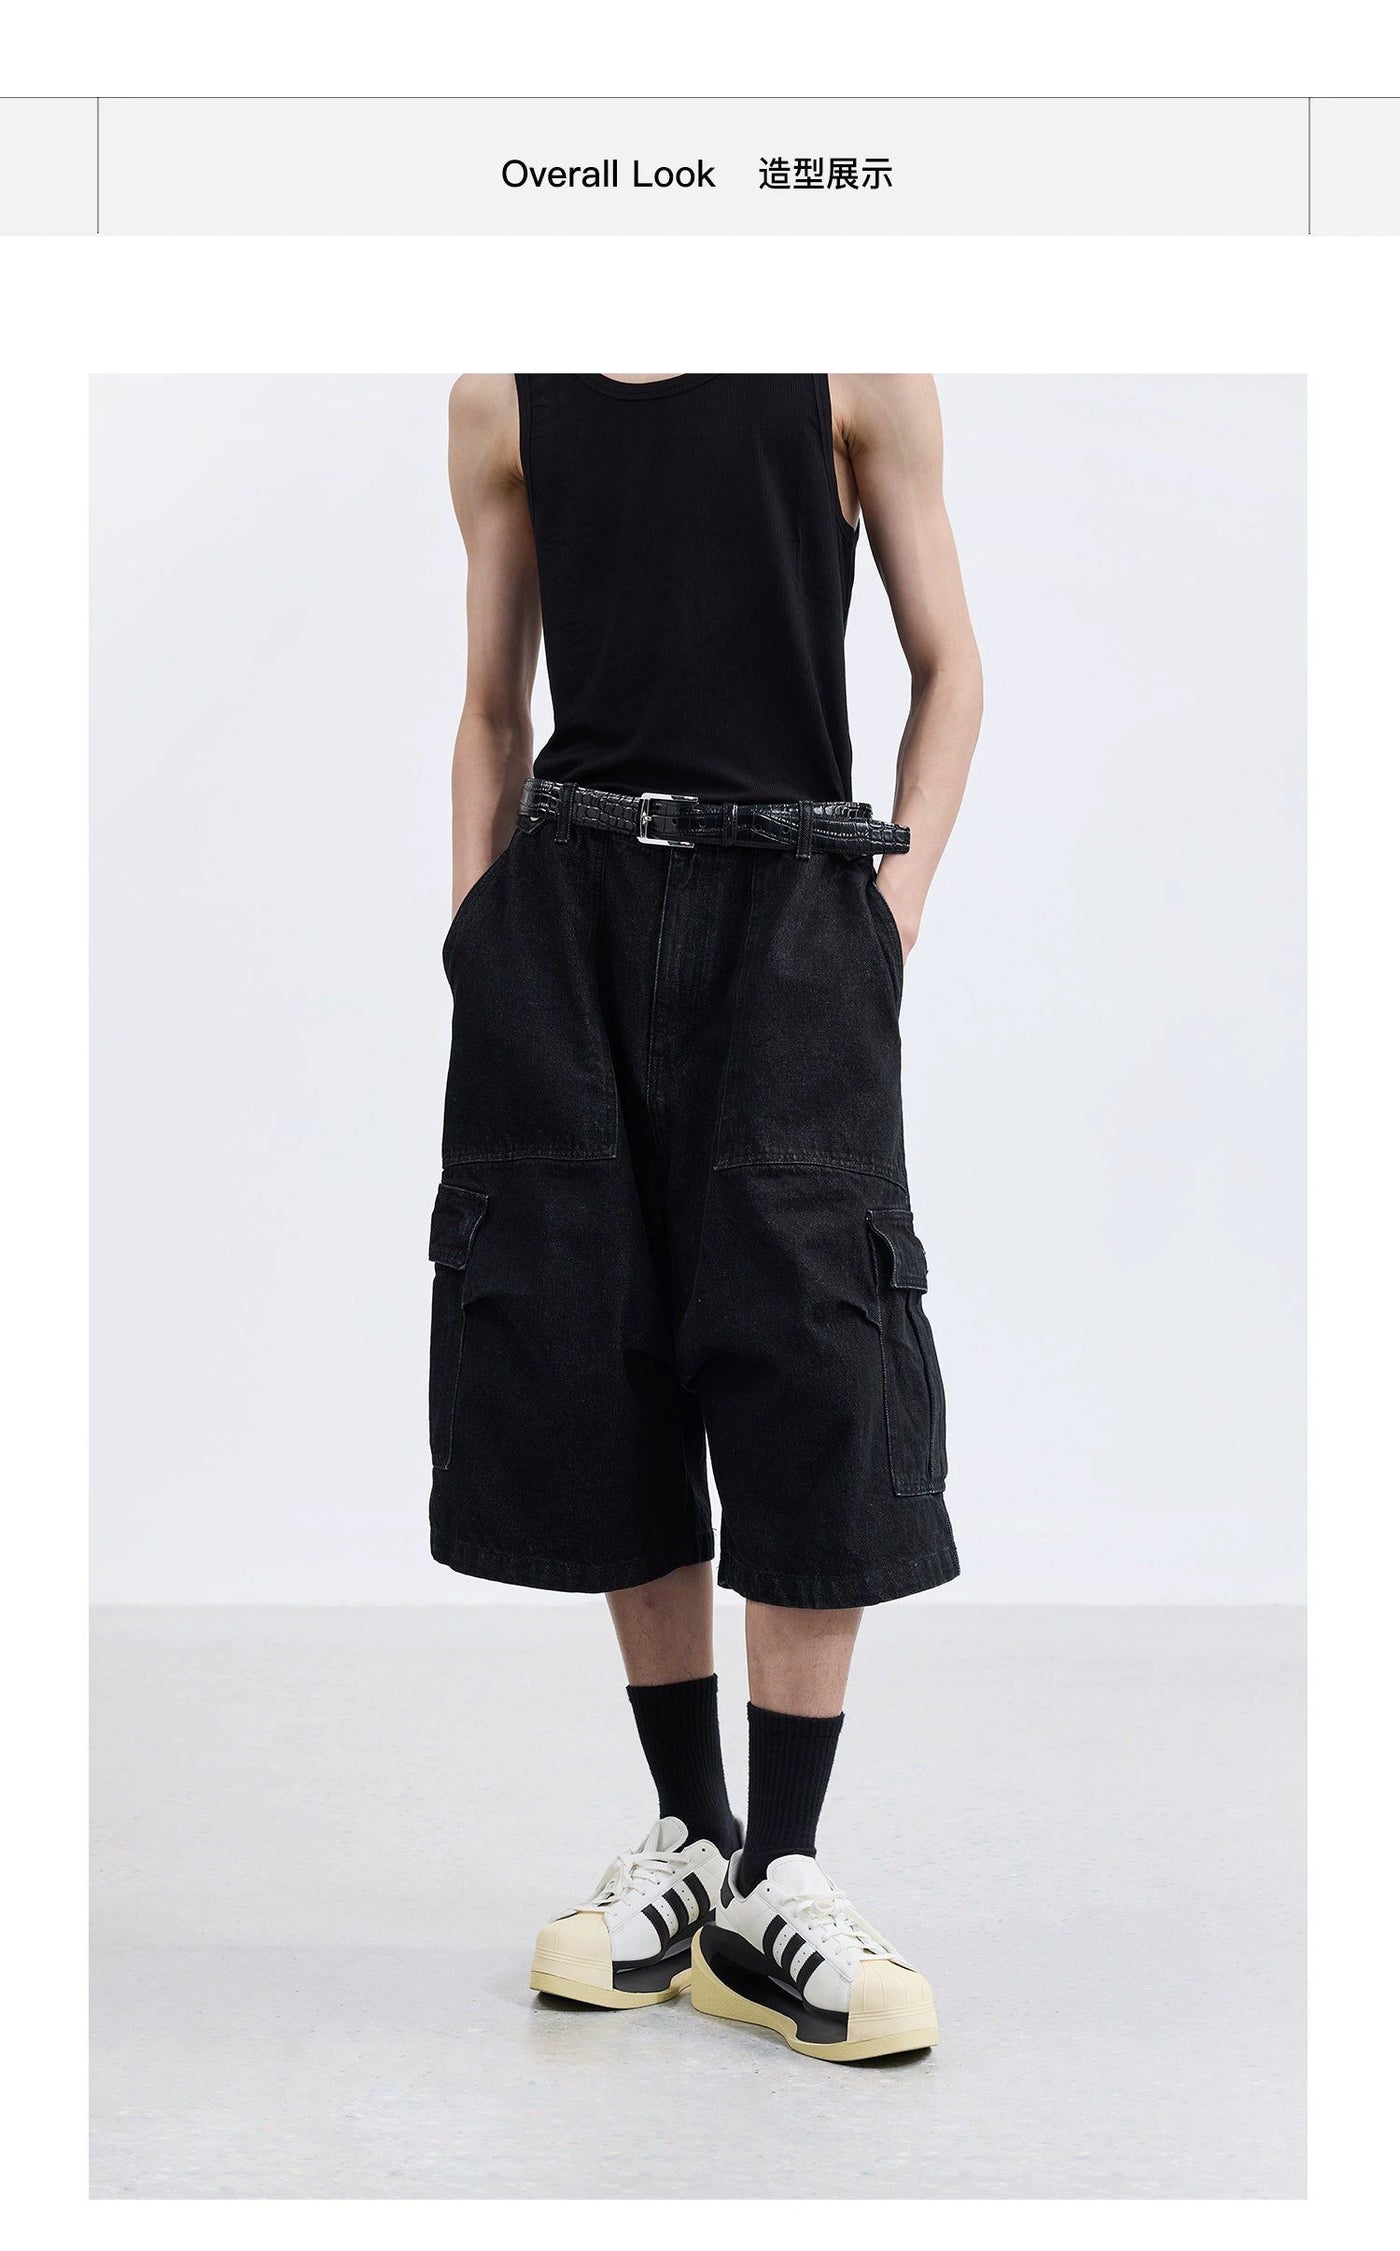 Wide Pockets Denim Shorts Korean Street Fashion Shorts By Terra Incognita Shop Online at OH Vault